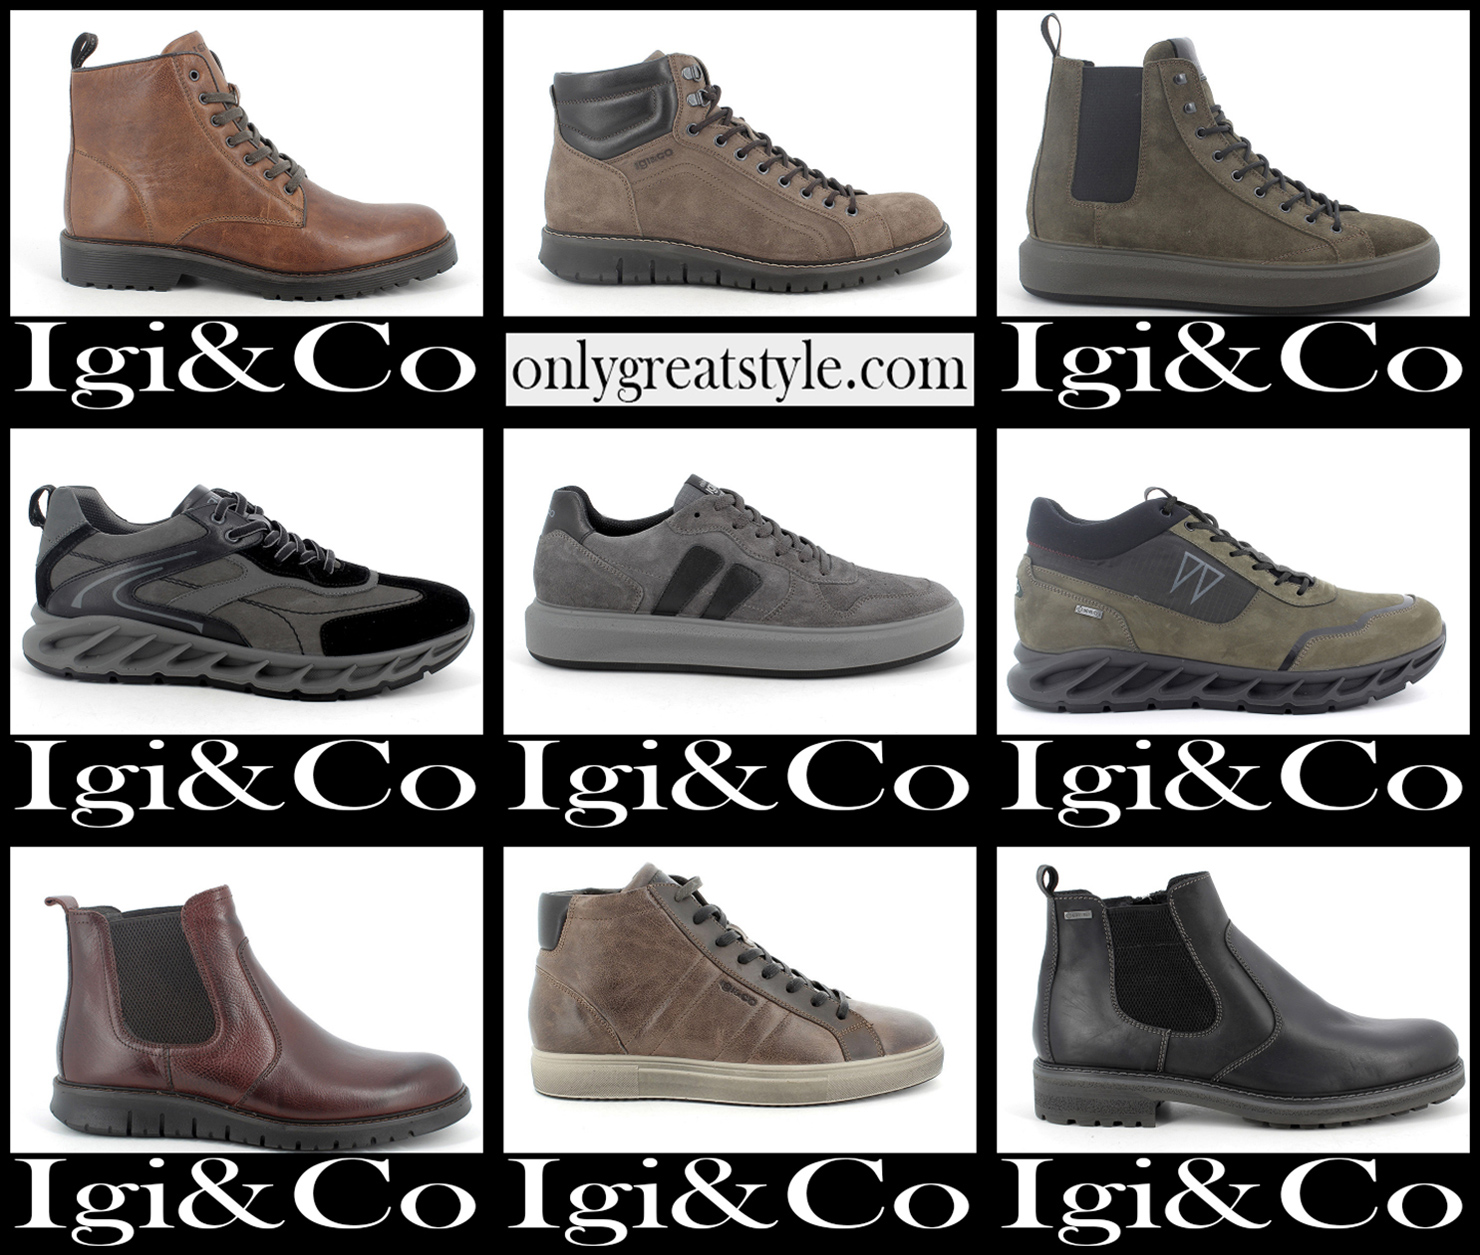 IgiCo shoes 2022 new arrivals mens footwear